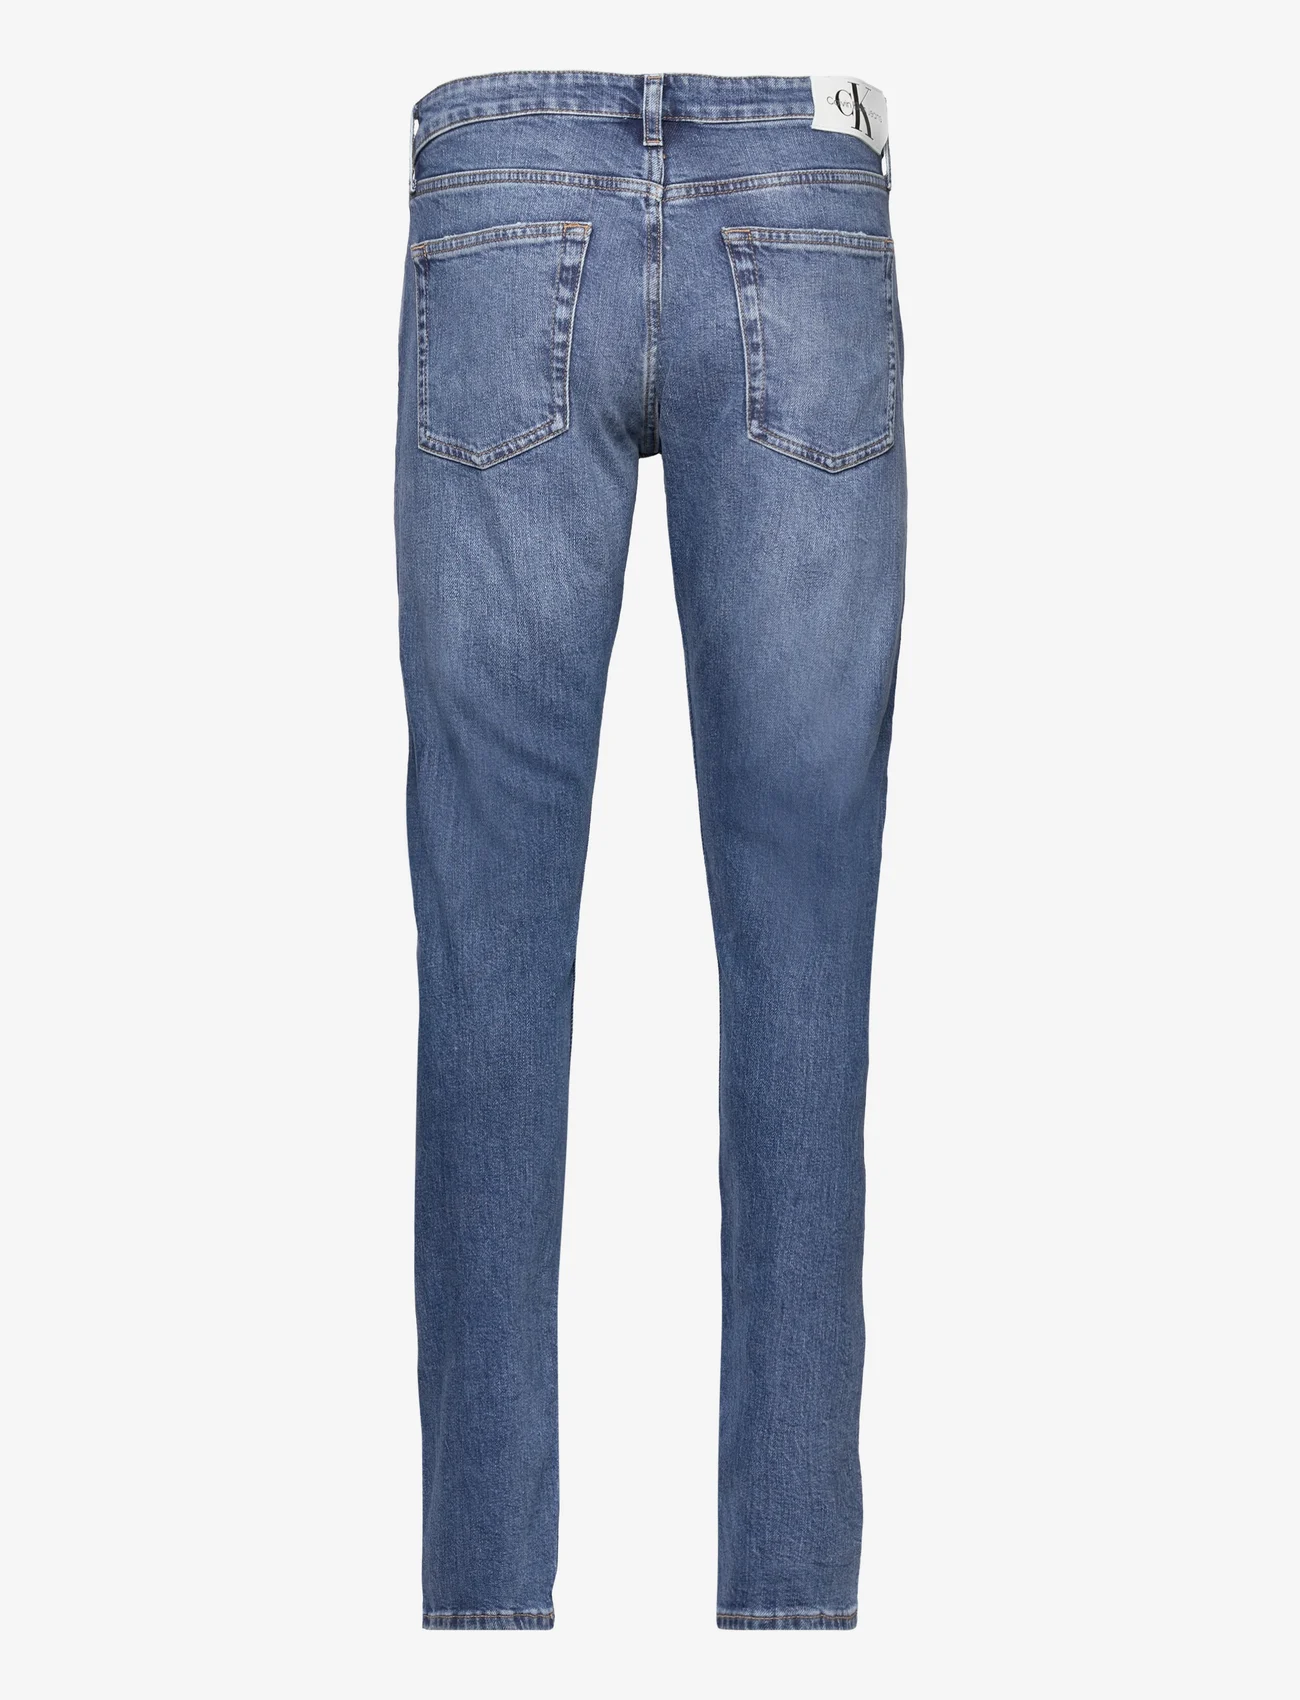 Calvin Klein Jeans - SLIM - slim jeans - denim medium - 1